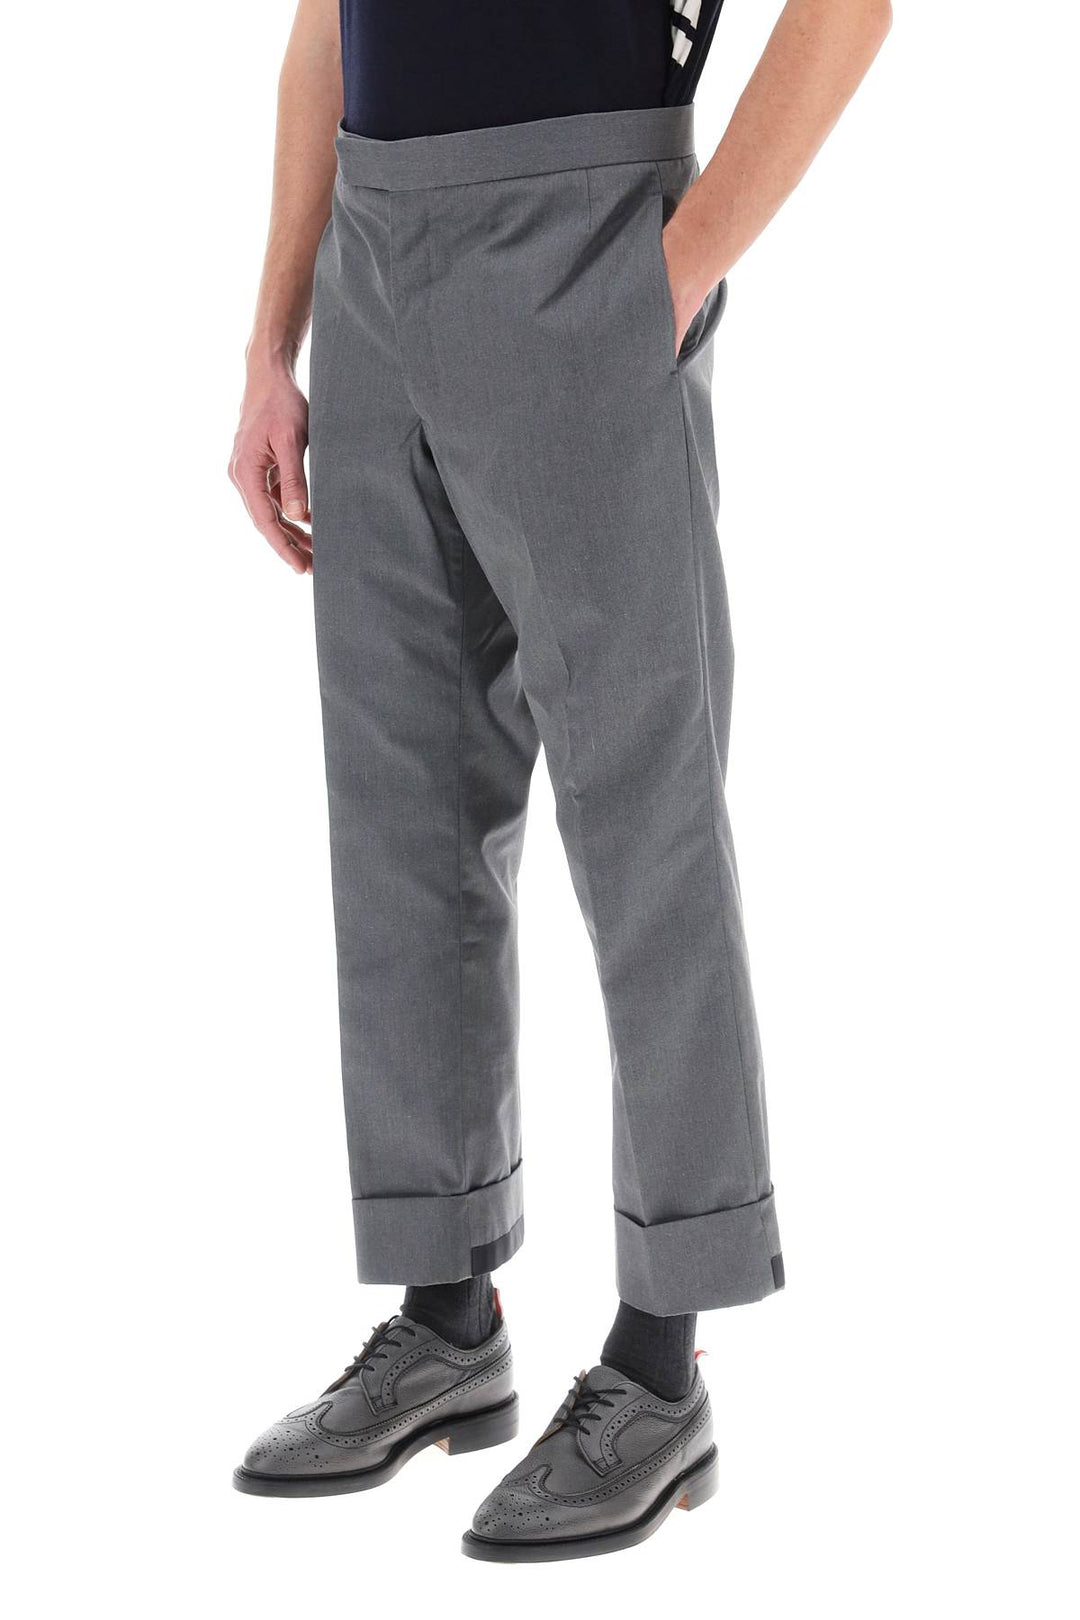 Thom Browne Cropped Tailoring Pants   Grigio